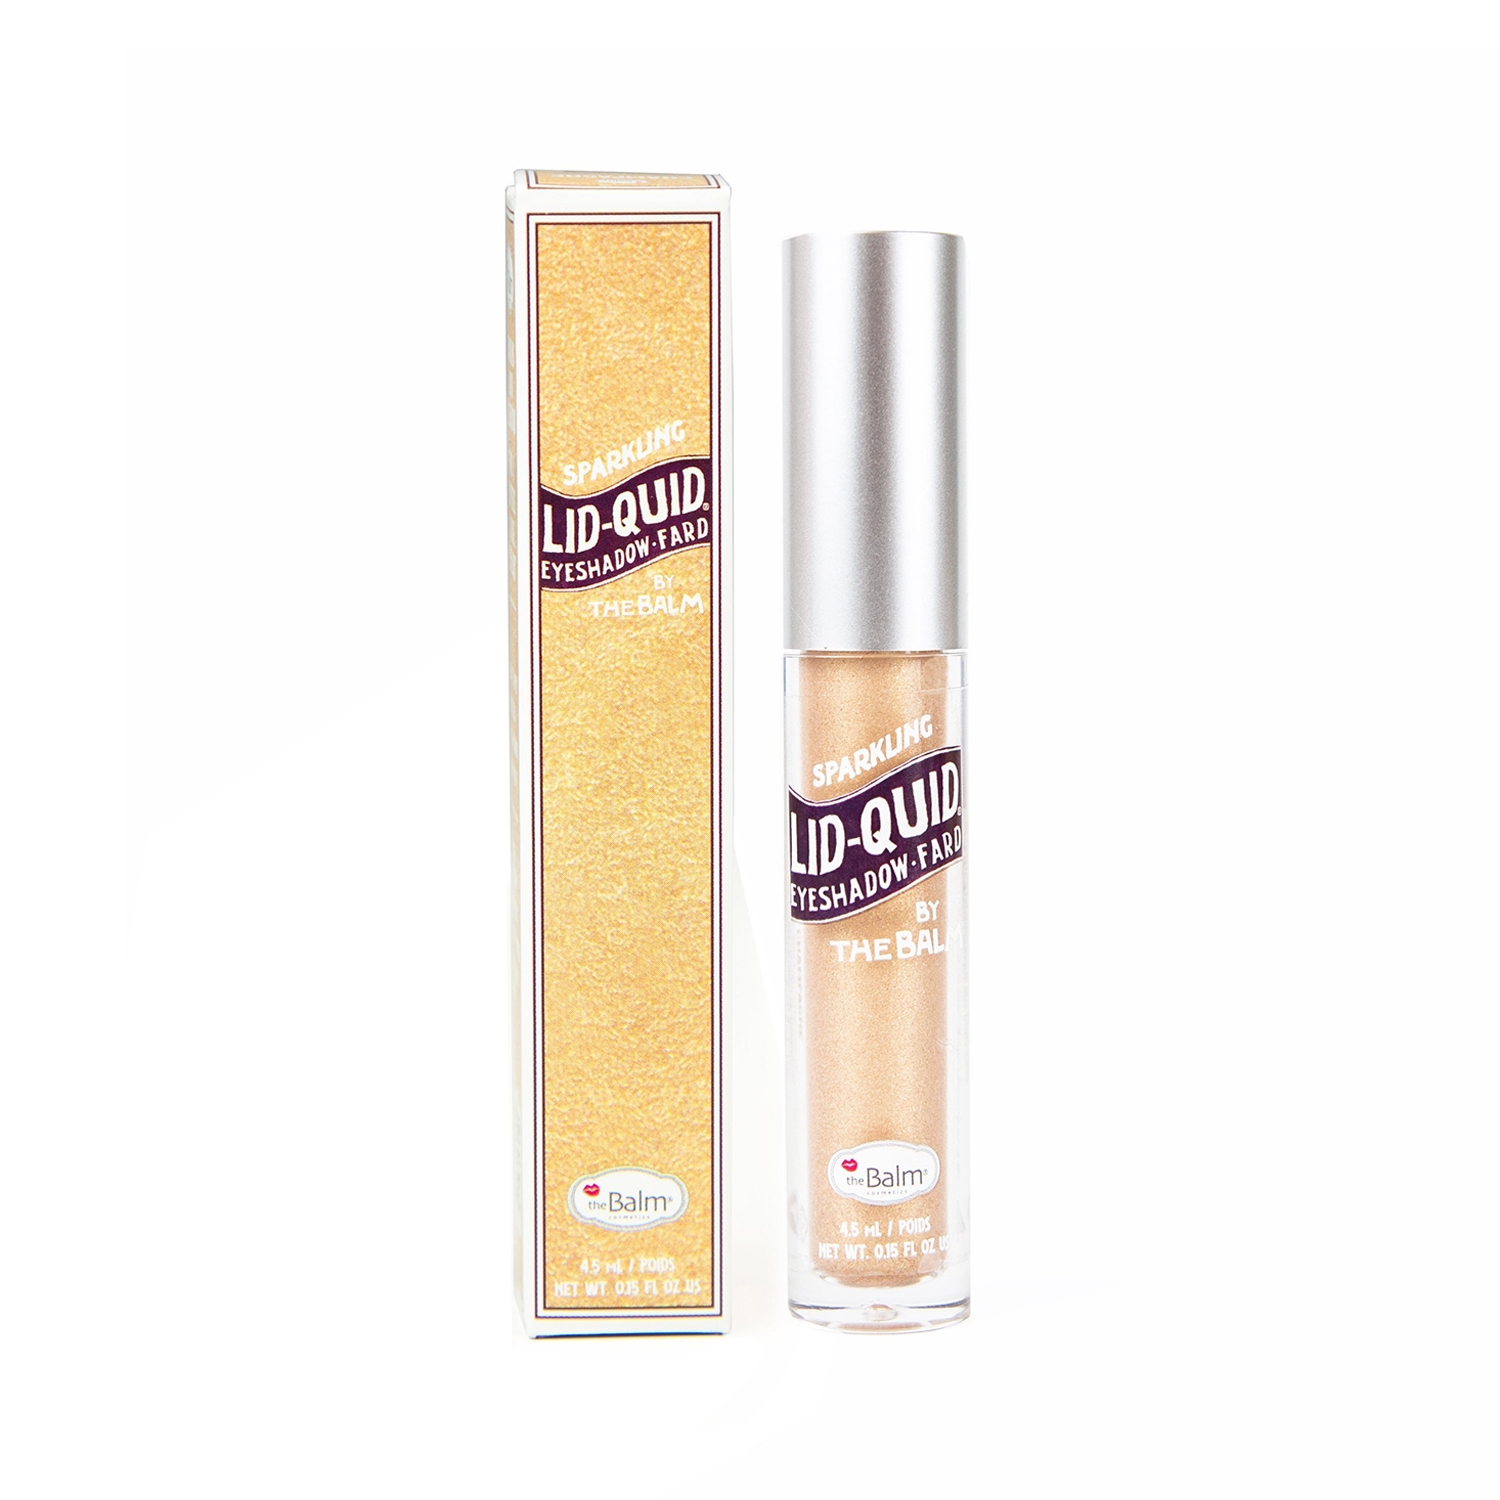 theBalm Cosmetics | theBalm Cosmetics Lid-Quid Sparkling Liquid Eyeshadow - Champagne (4.5ml)